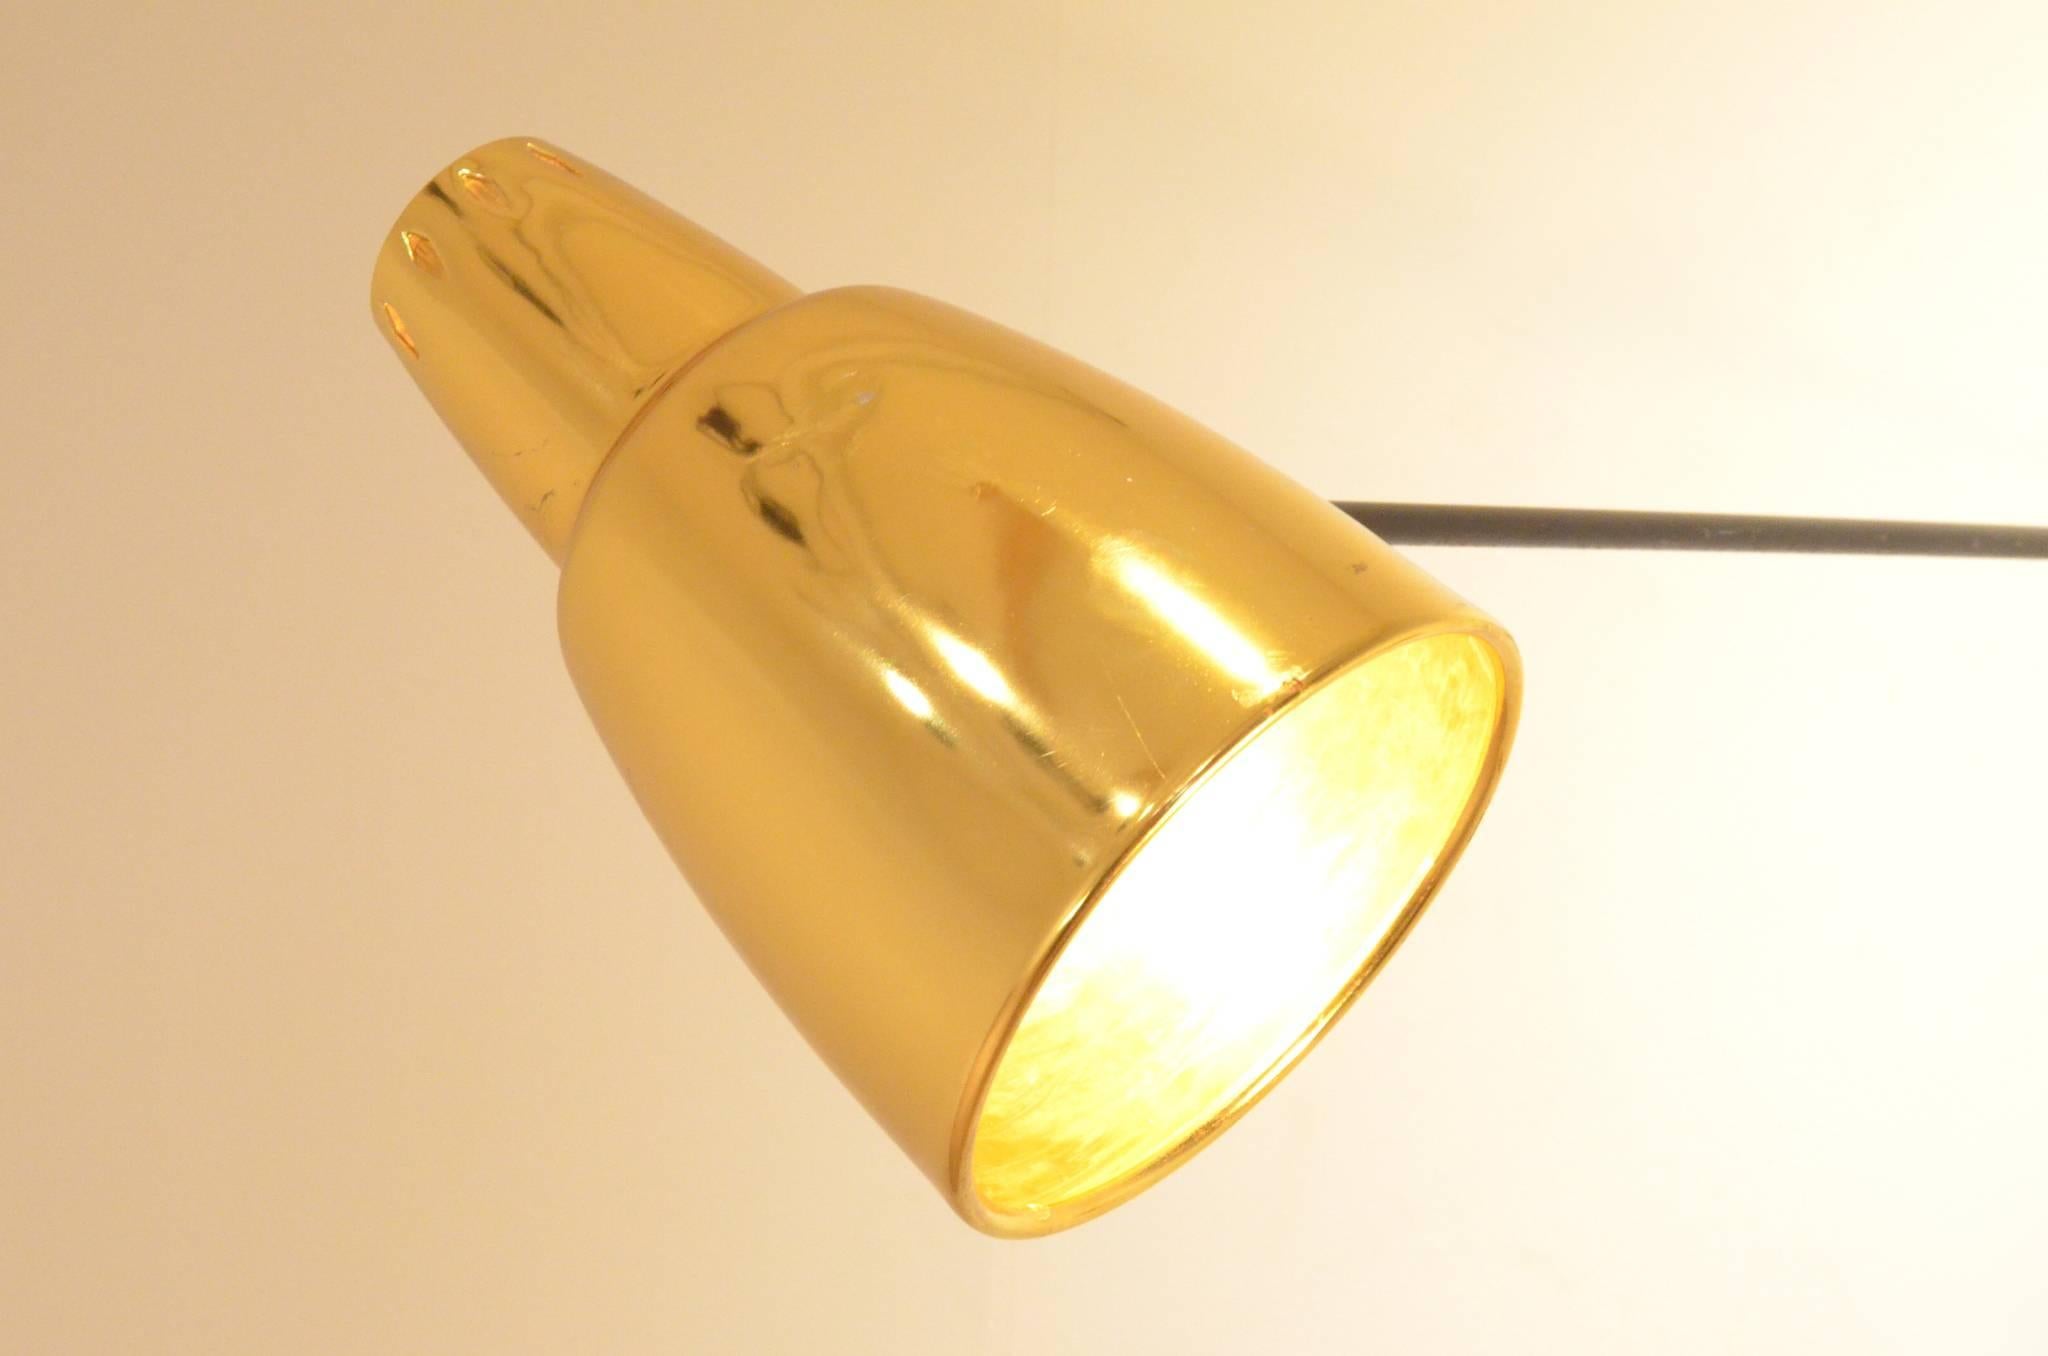 Two French Design Luminalite Golden Aluminium Metal Arm Lamps Sconces For Sale 3